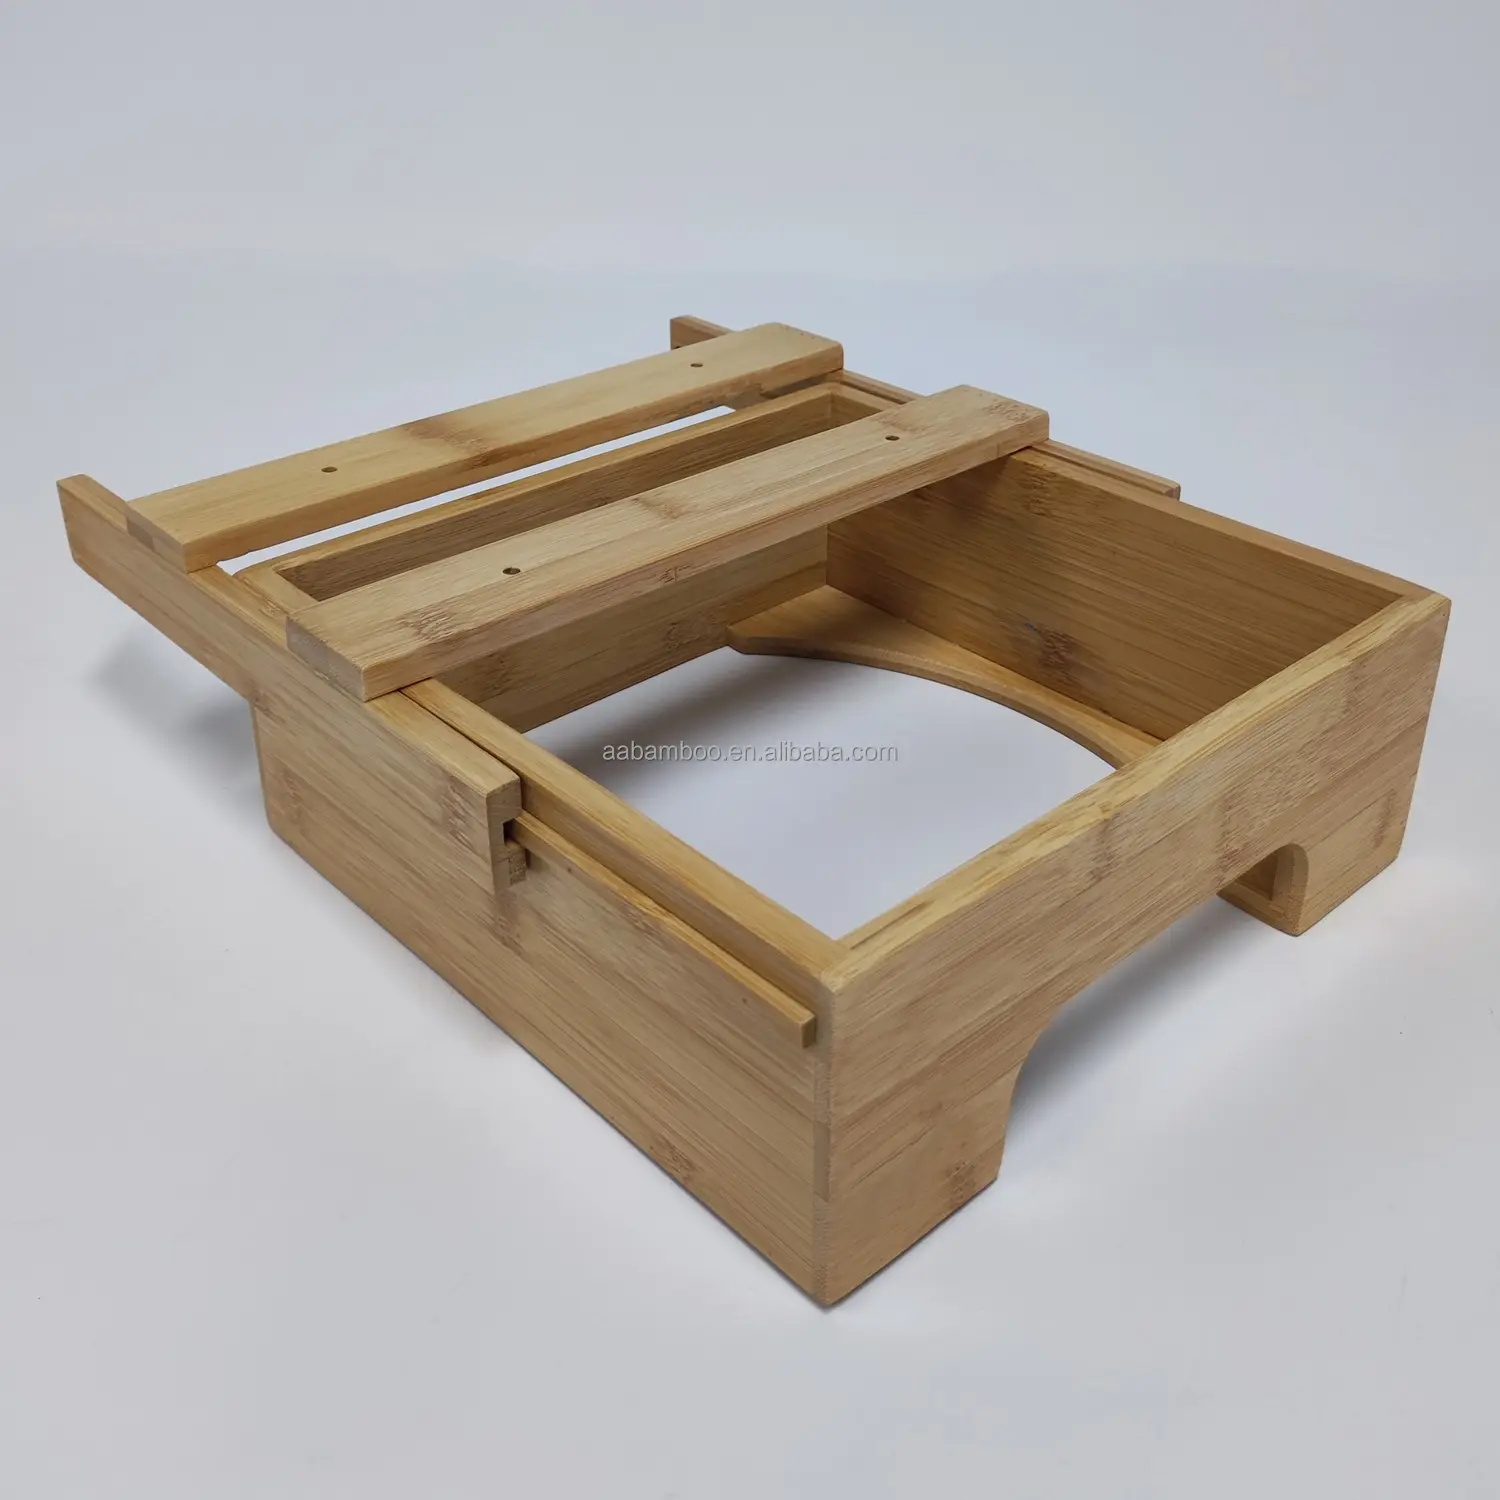 Kitchen wood caddy 9-inch bamboo paper plate holder dispenser under cabinet